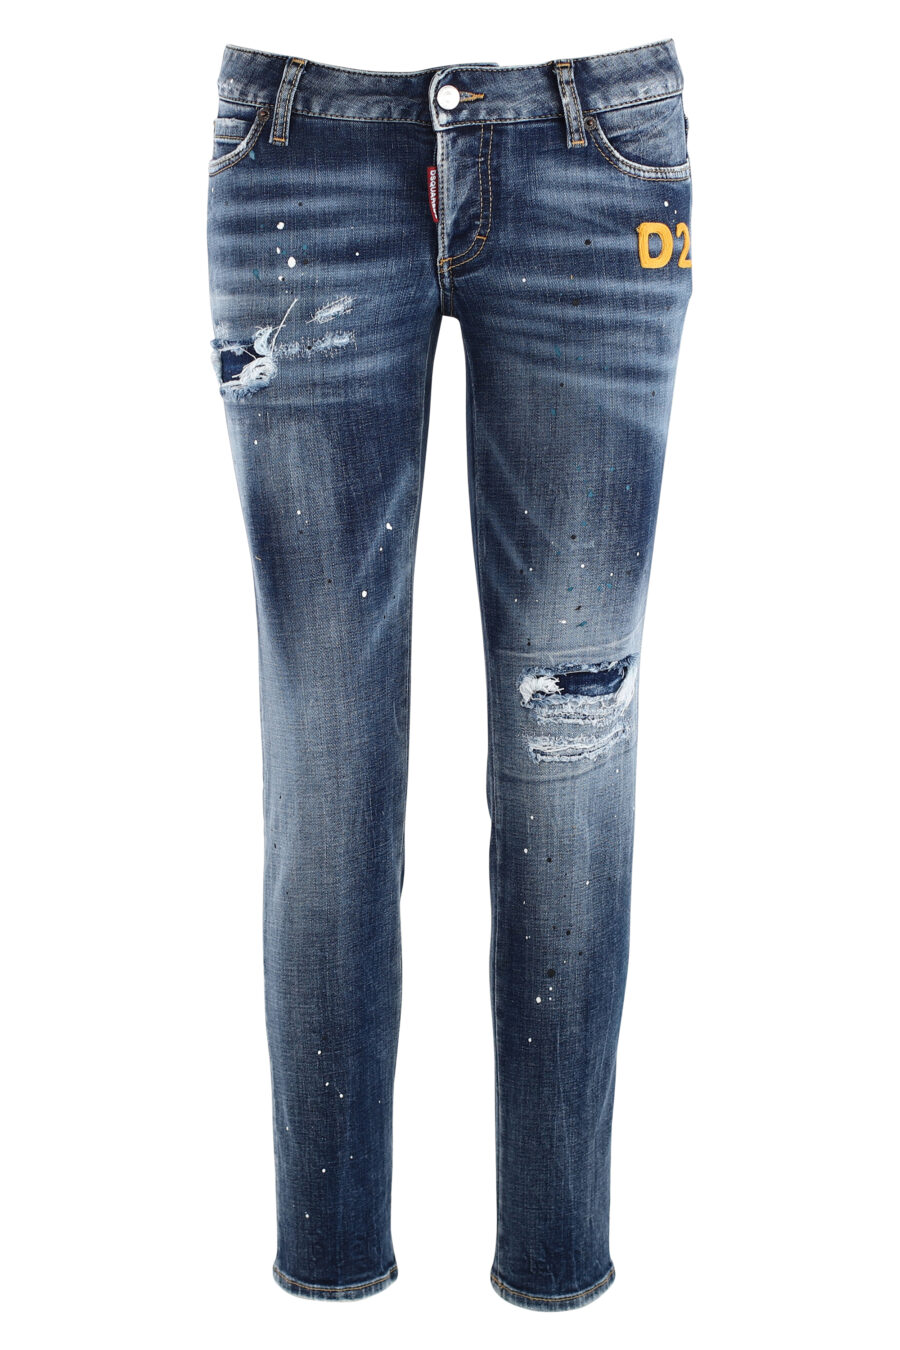 Pantalón tejano azul Jennifer cropped jean con bordado amarillo - IMG 7585